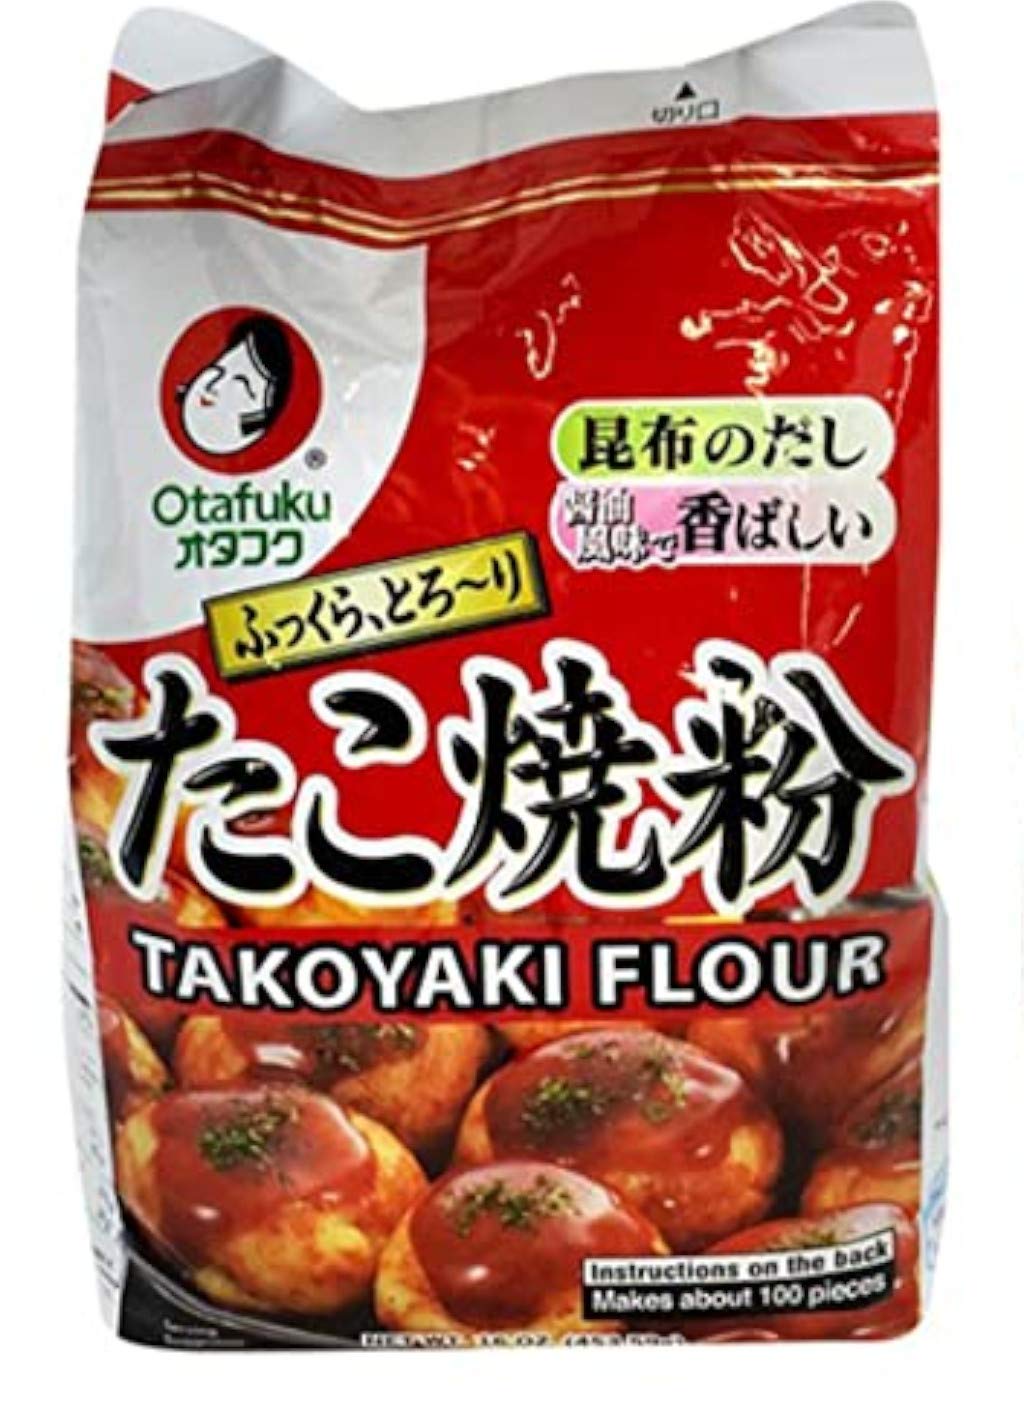 Otafuku Takoyaki Flour